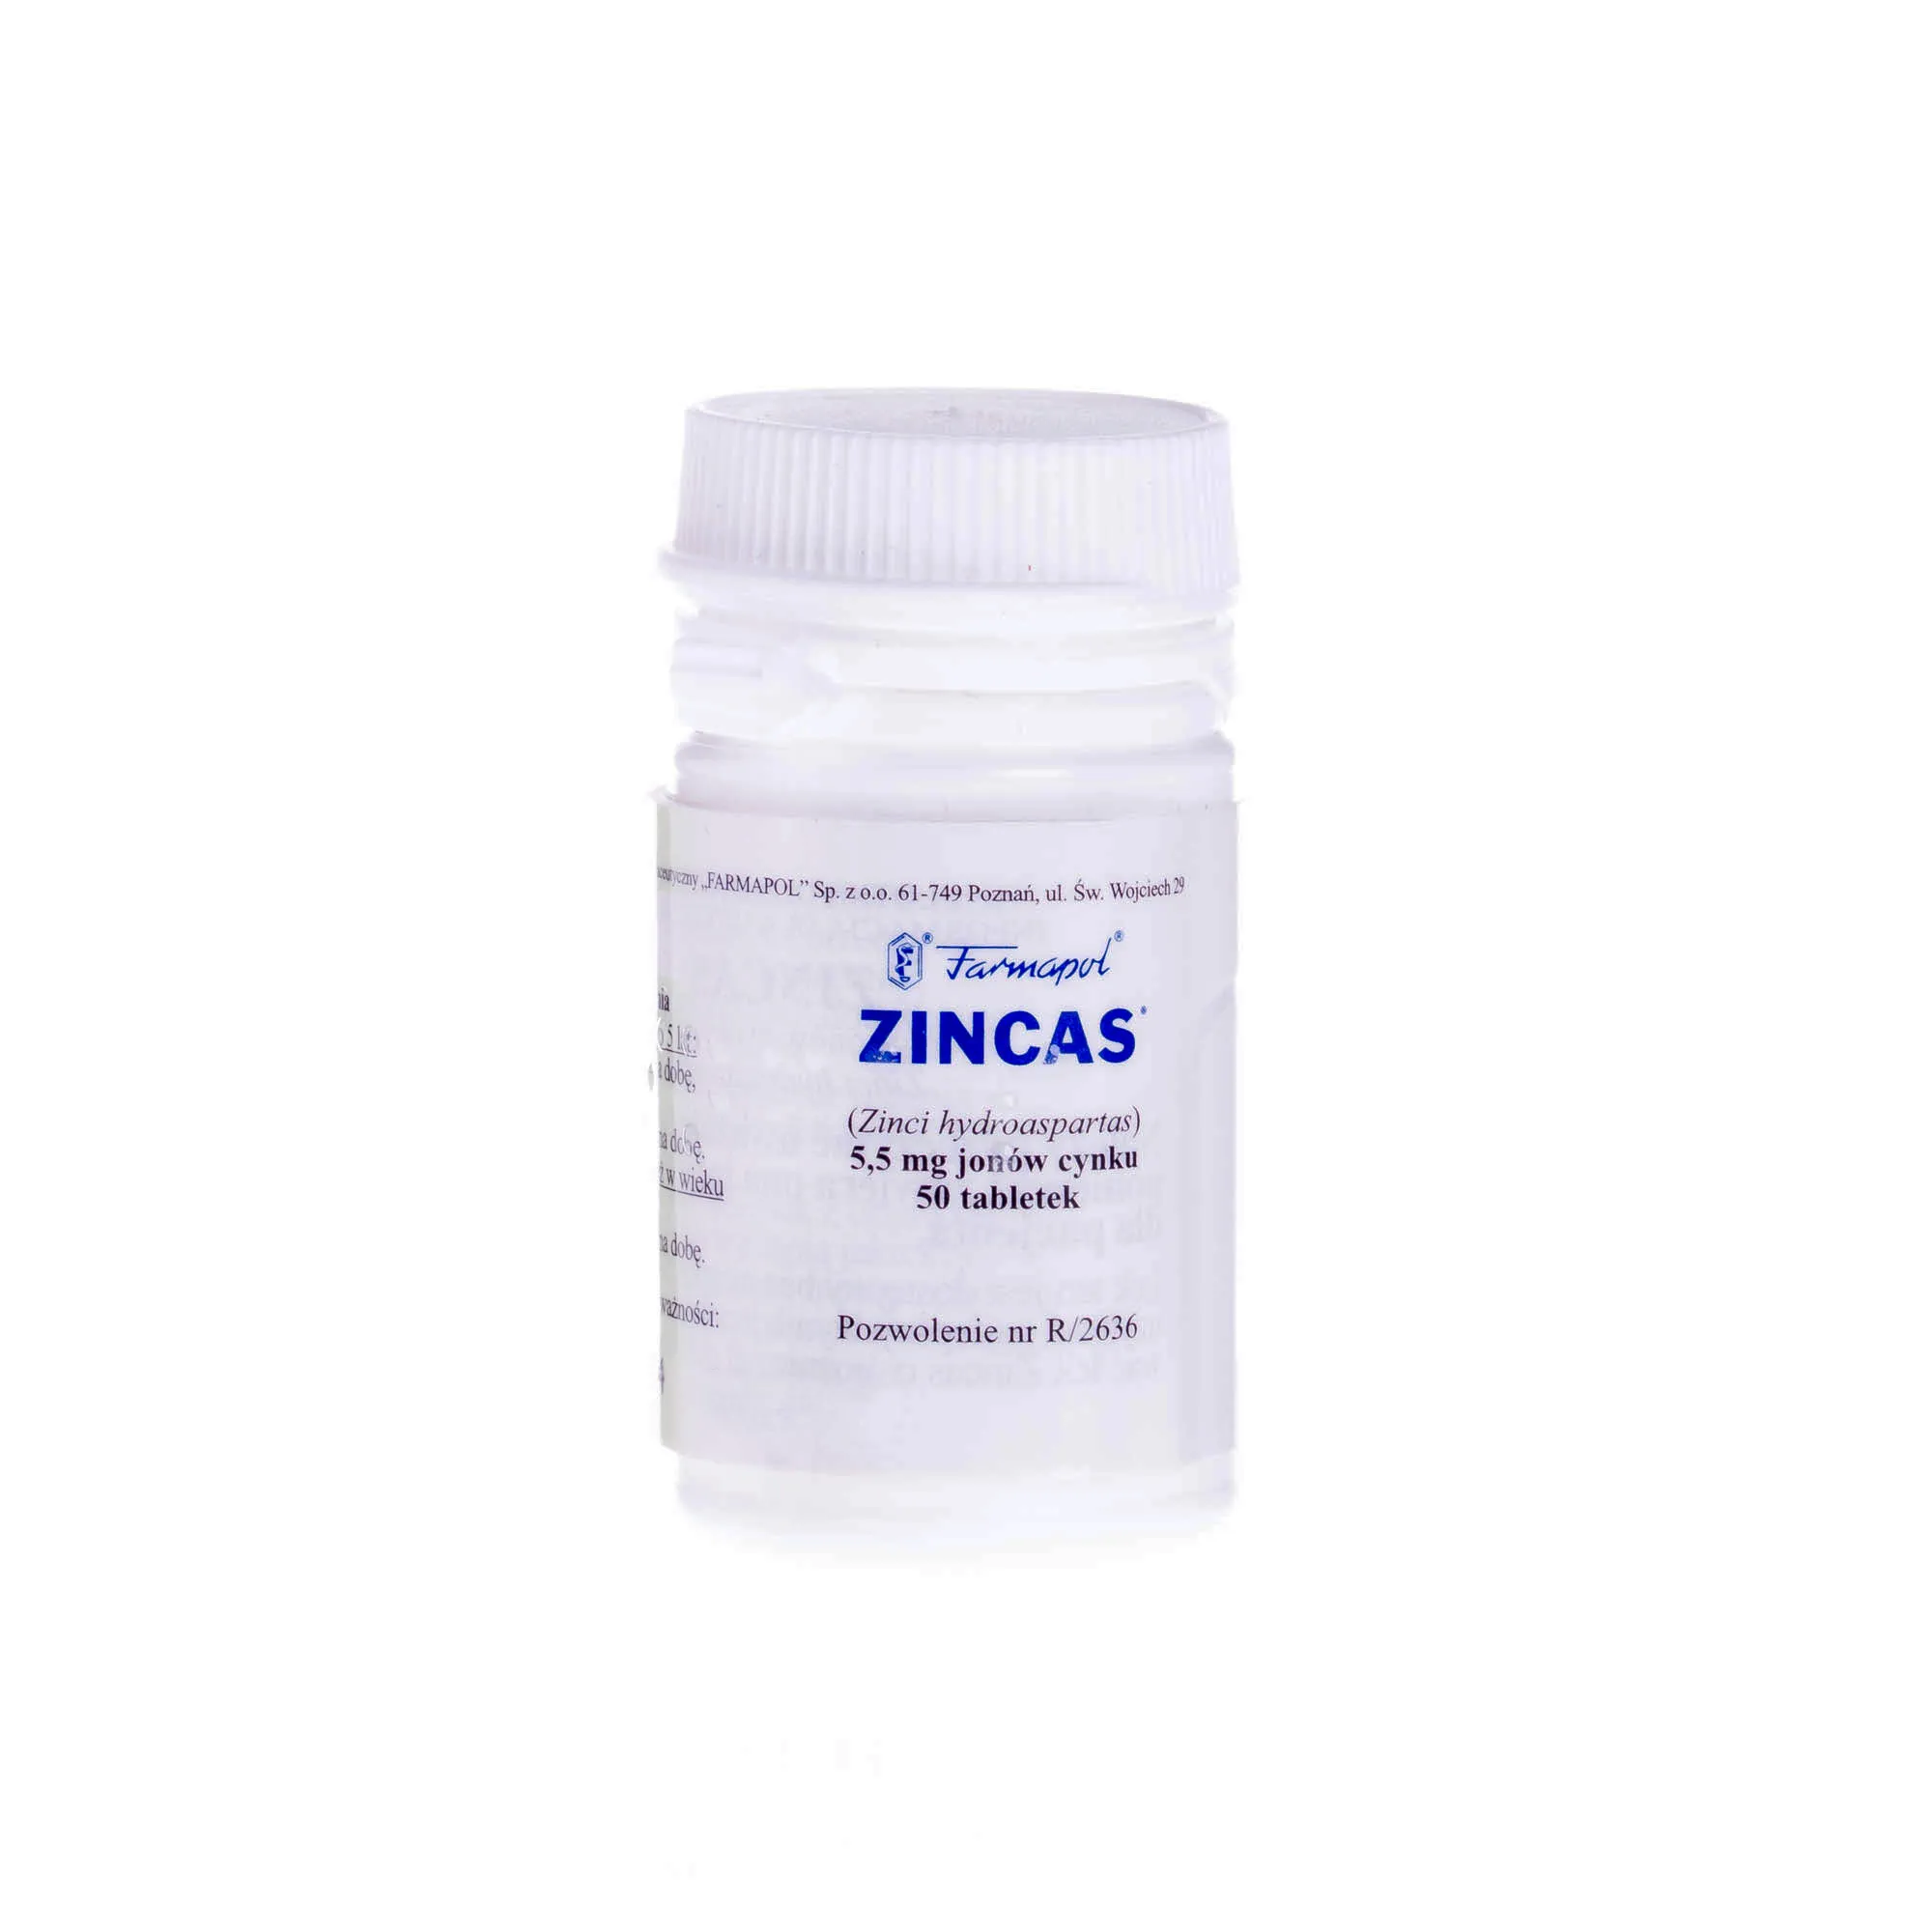 Zincas - 5,5 mg jonów cynku, 50 tabletek